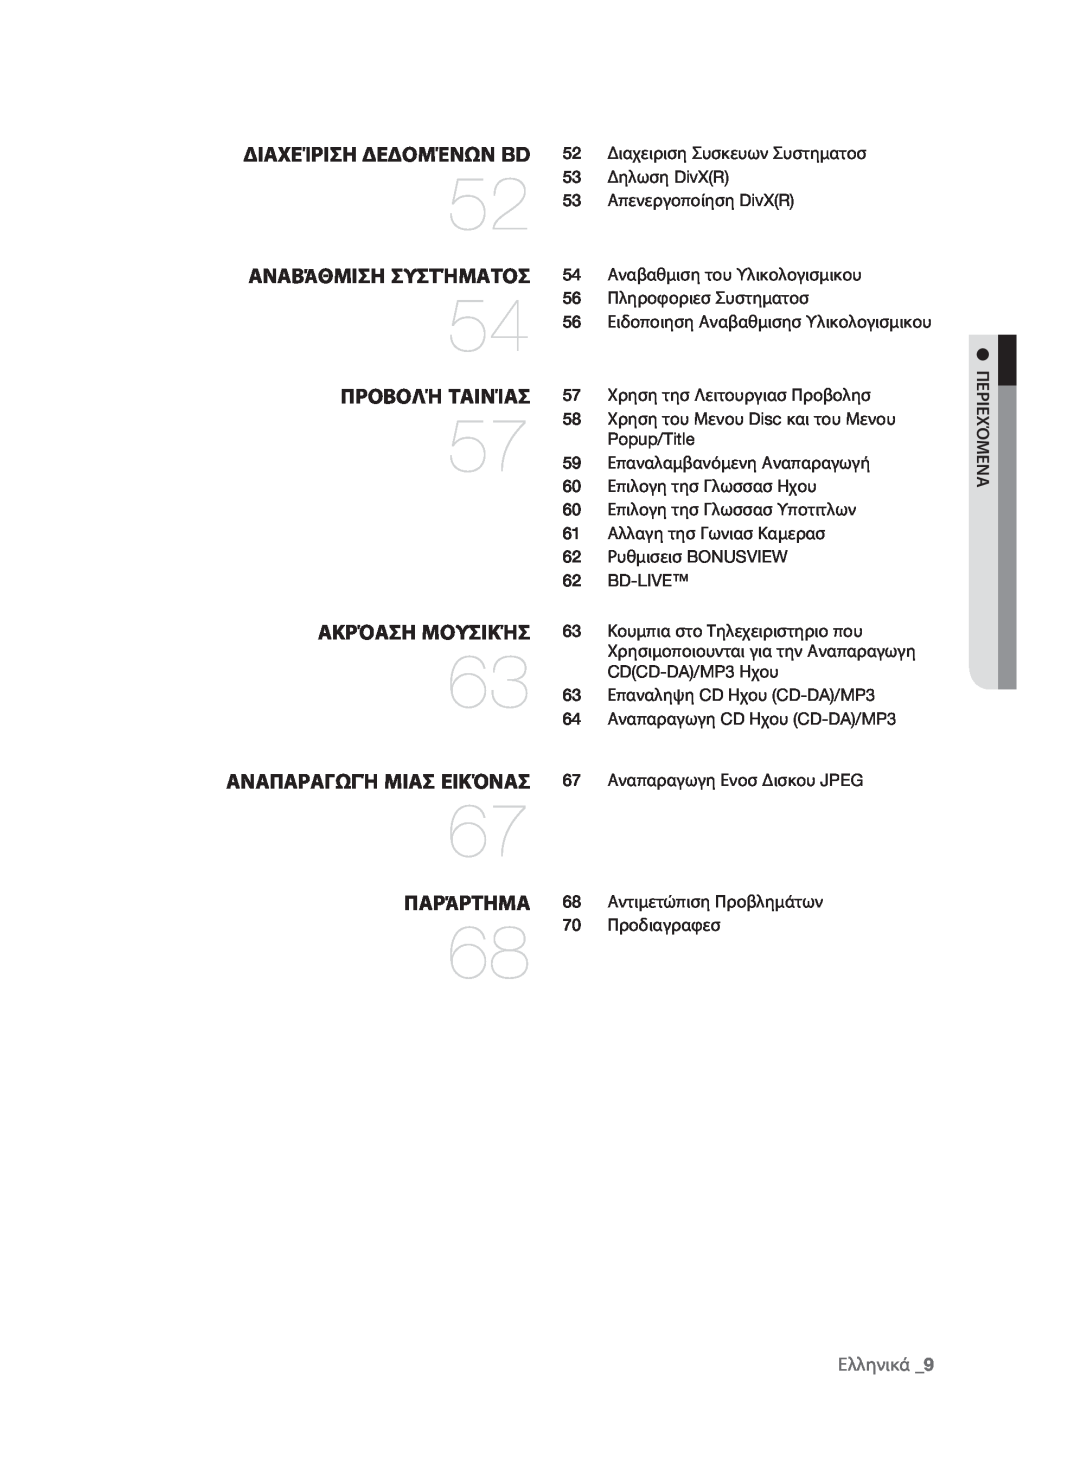 Samsung BD-P1580/EDC manual διαχείριση δεδομένων BD, αναβάθμιση συστήματος, προβολή ταινίας, ακρόαση μουσικής, παράρτημα 